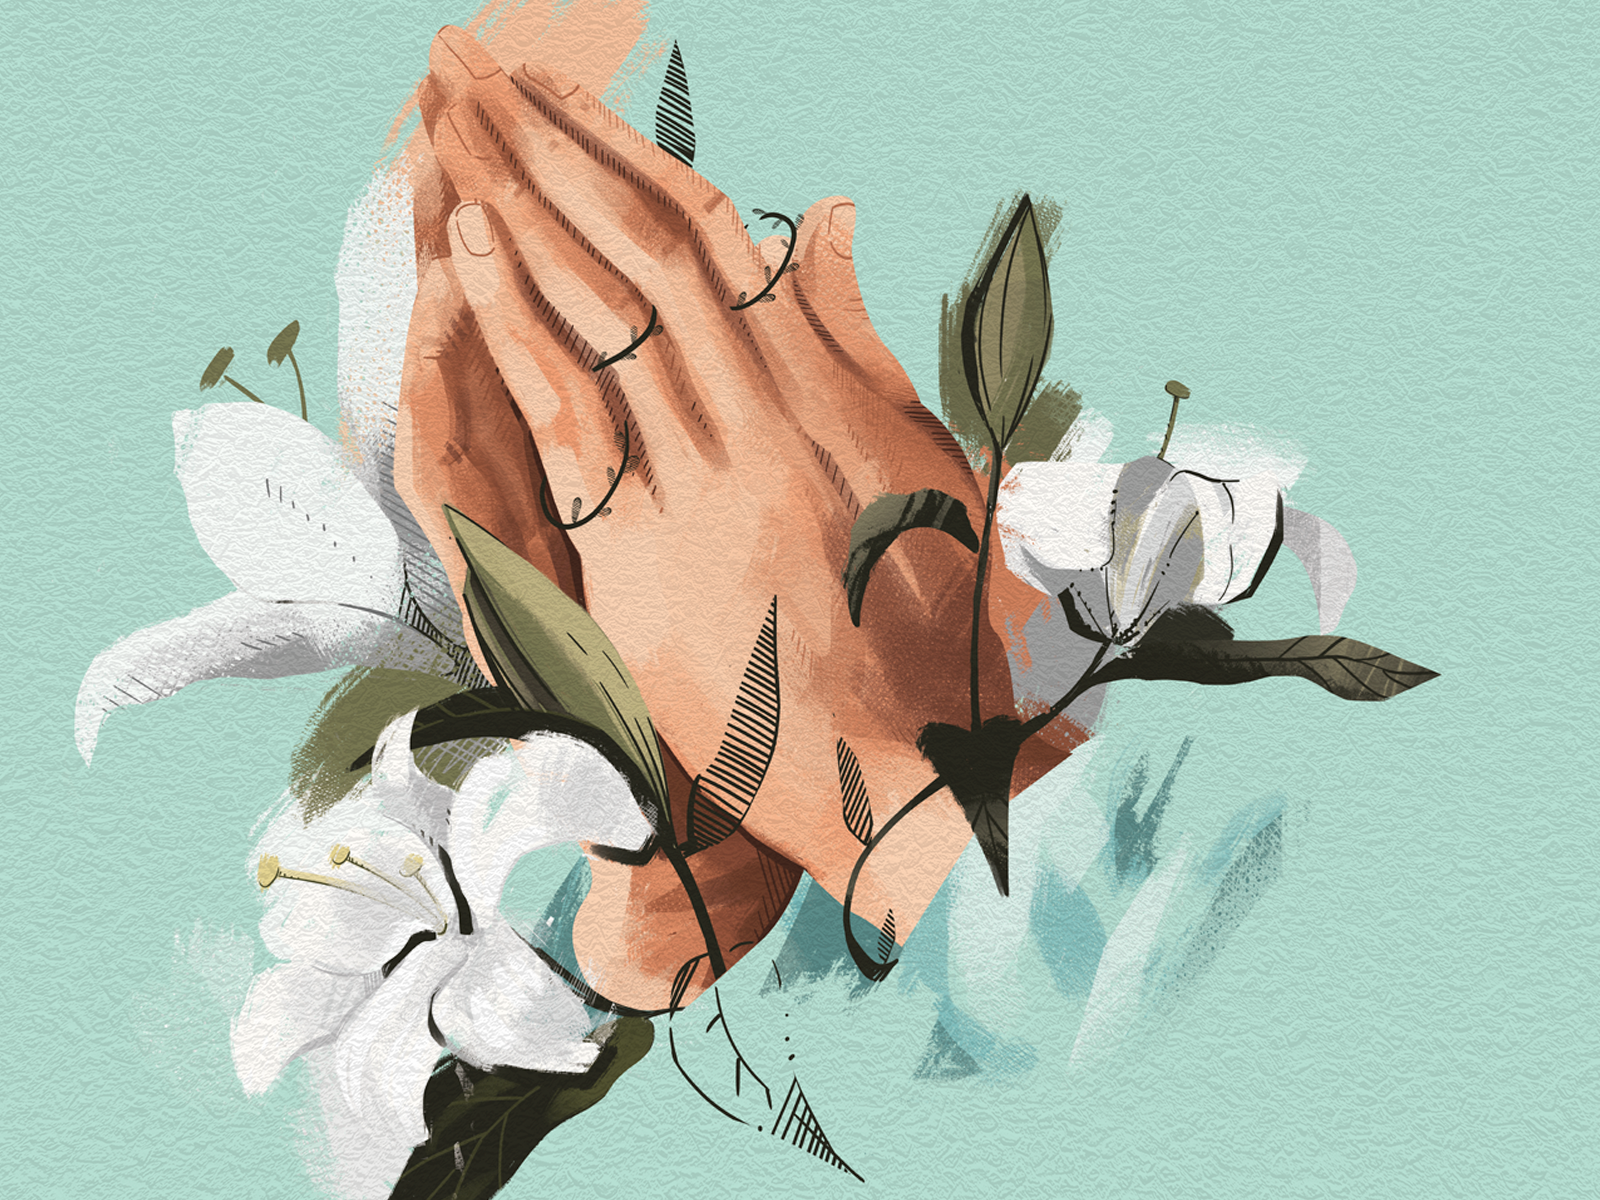 praying-hands-by-sasha-sakhnevich-on-dribbble